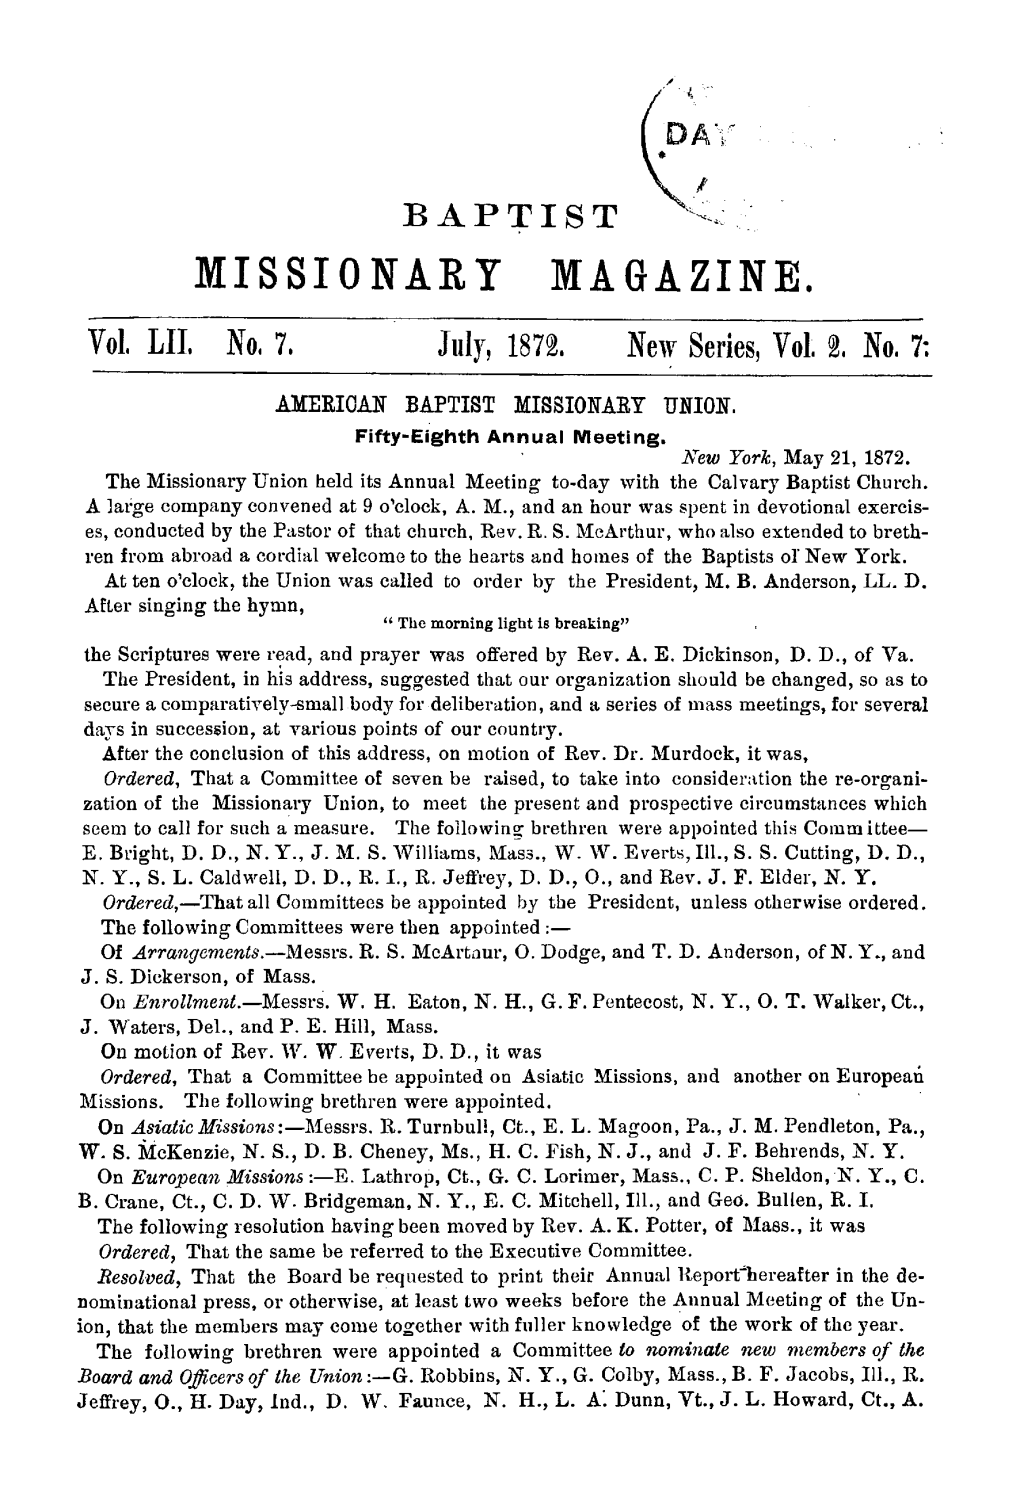 Missionary Magazine